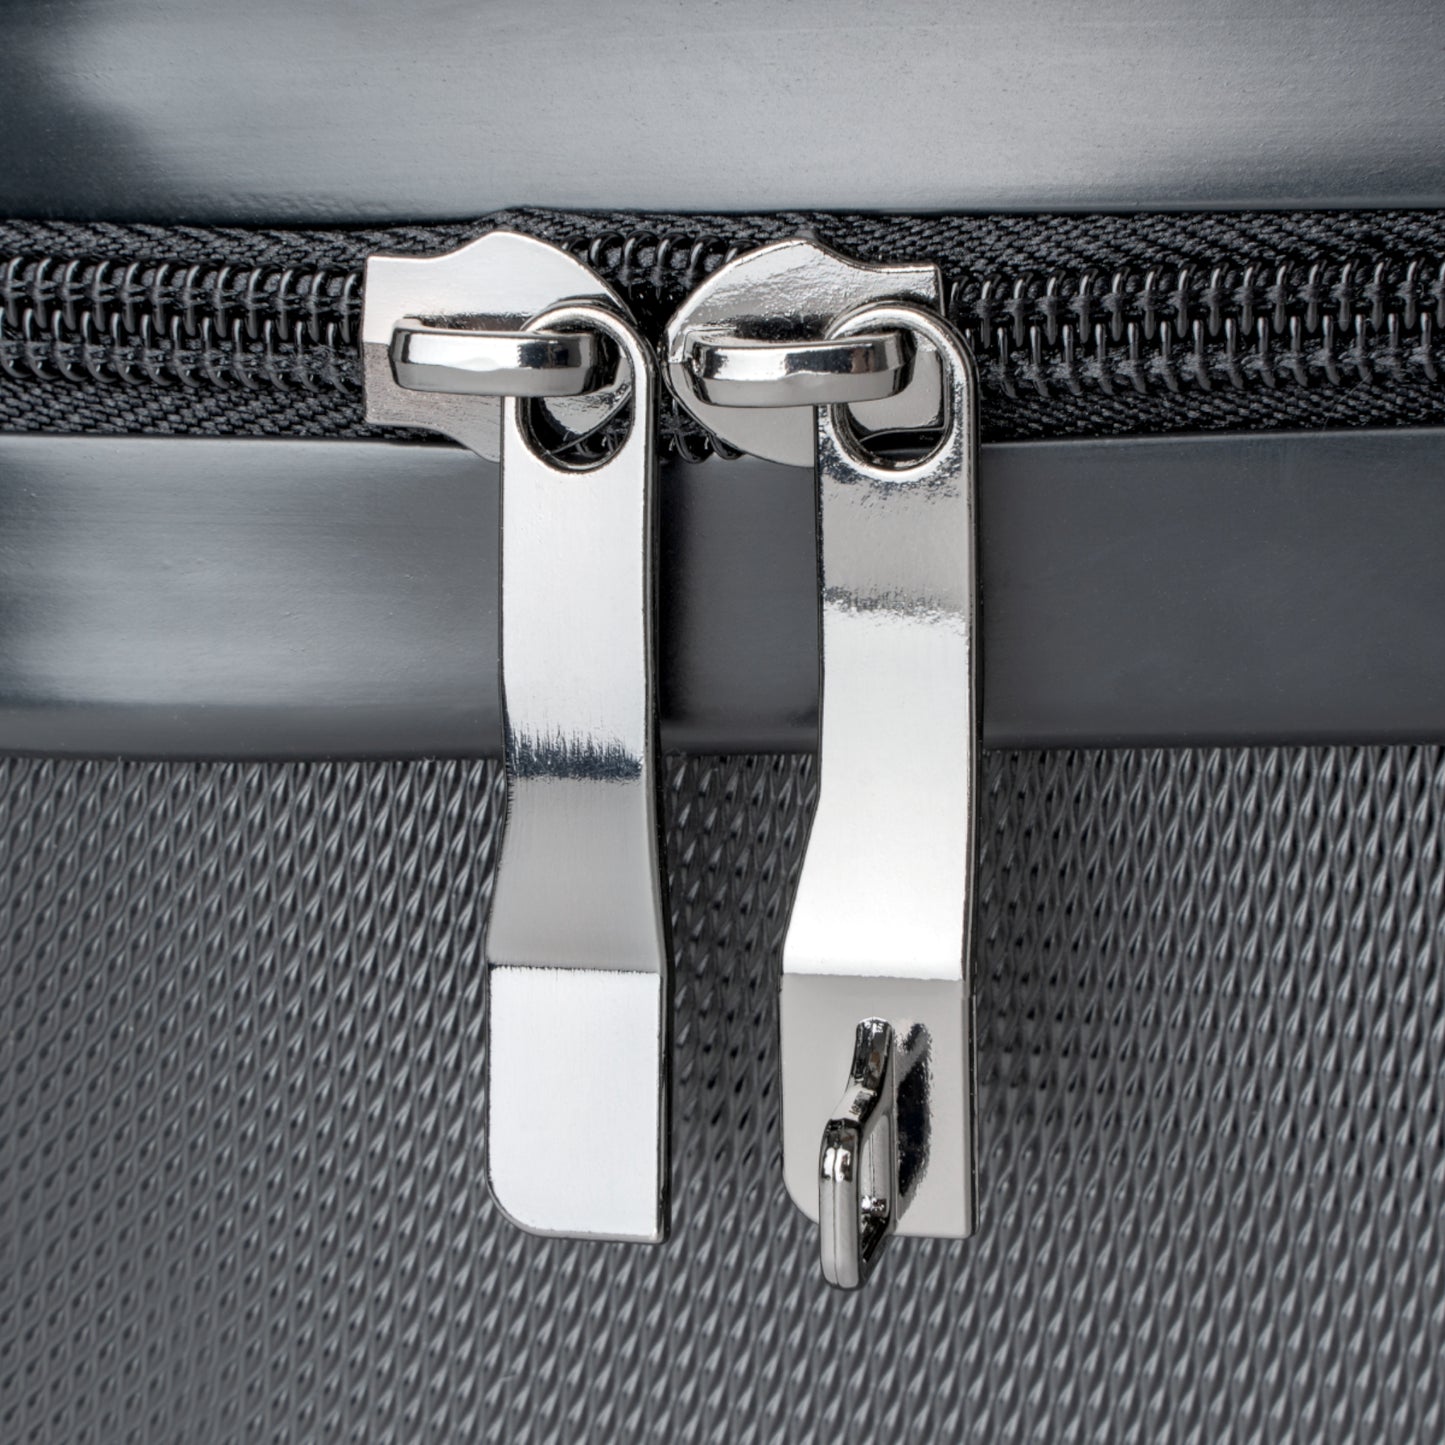 Contemporary Grey Suitcase - Unisex